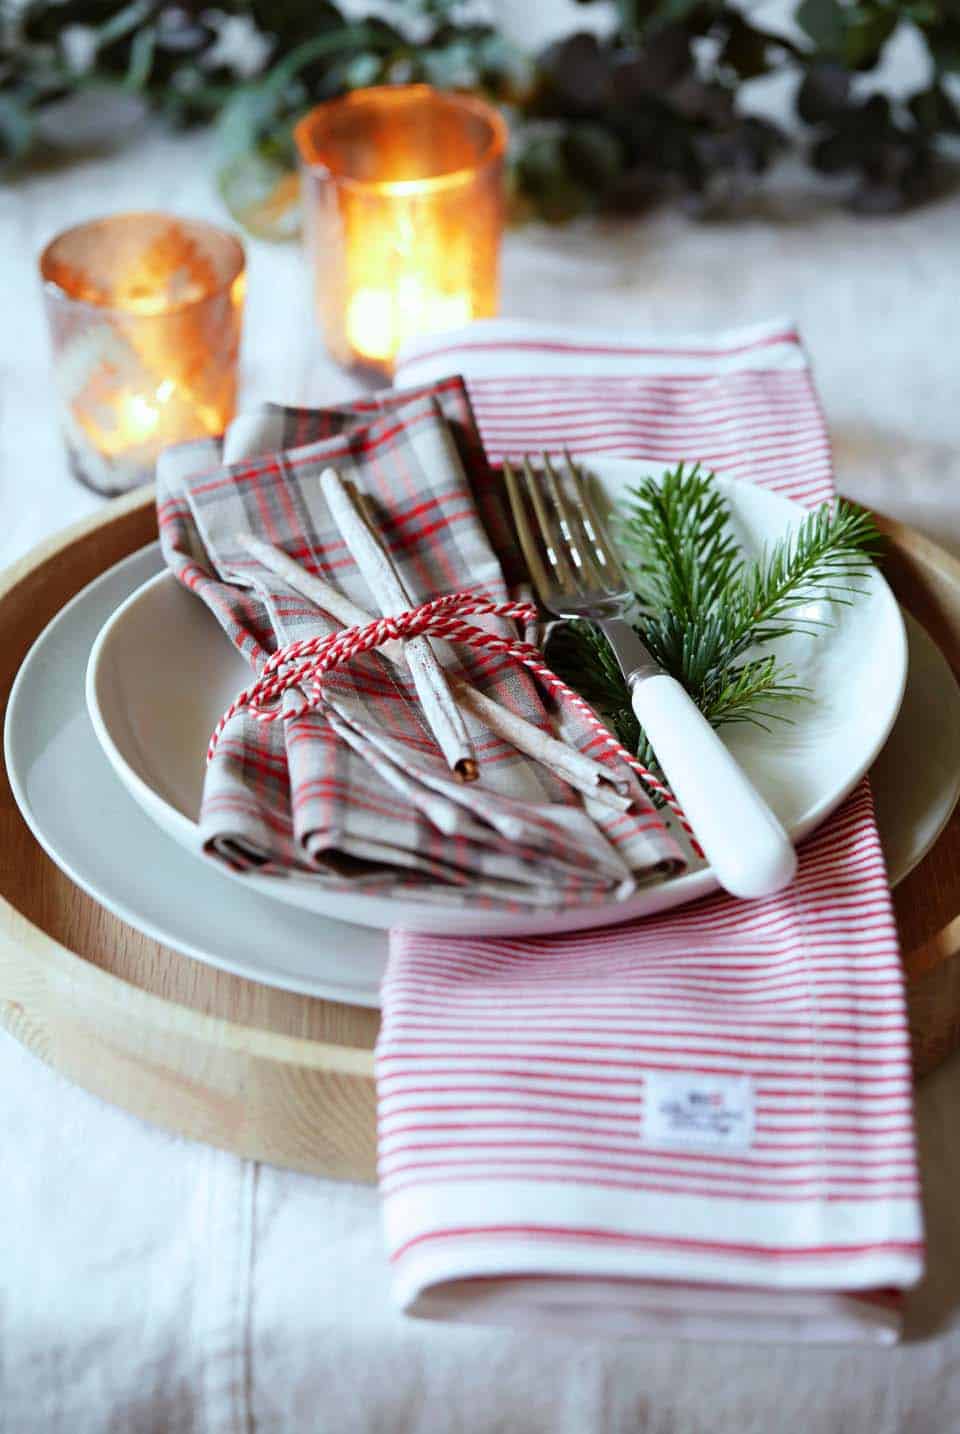 Inspiring Dining Table Christmas Decor Ideas-19-1 Kindesign